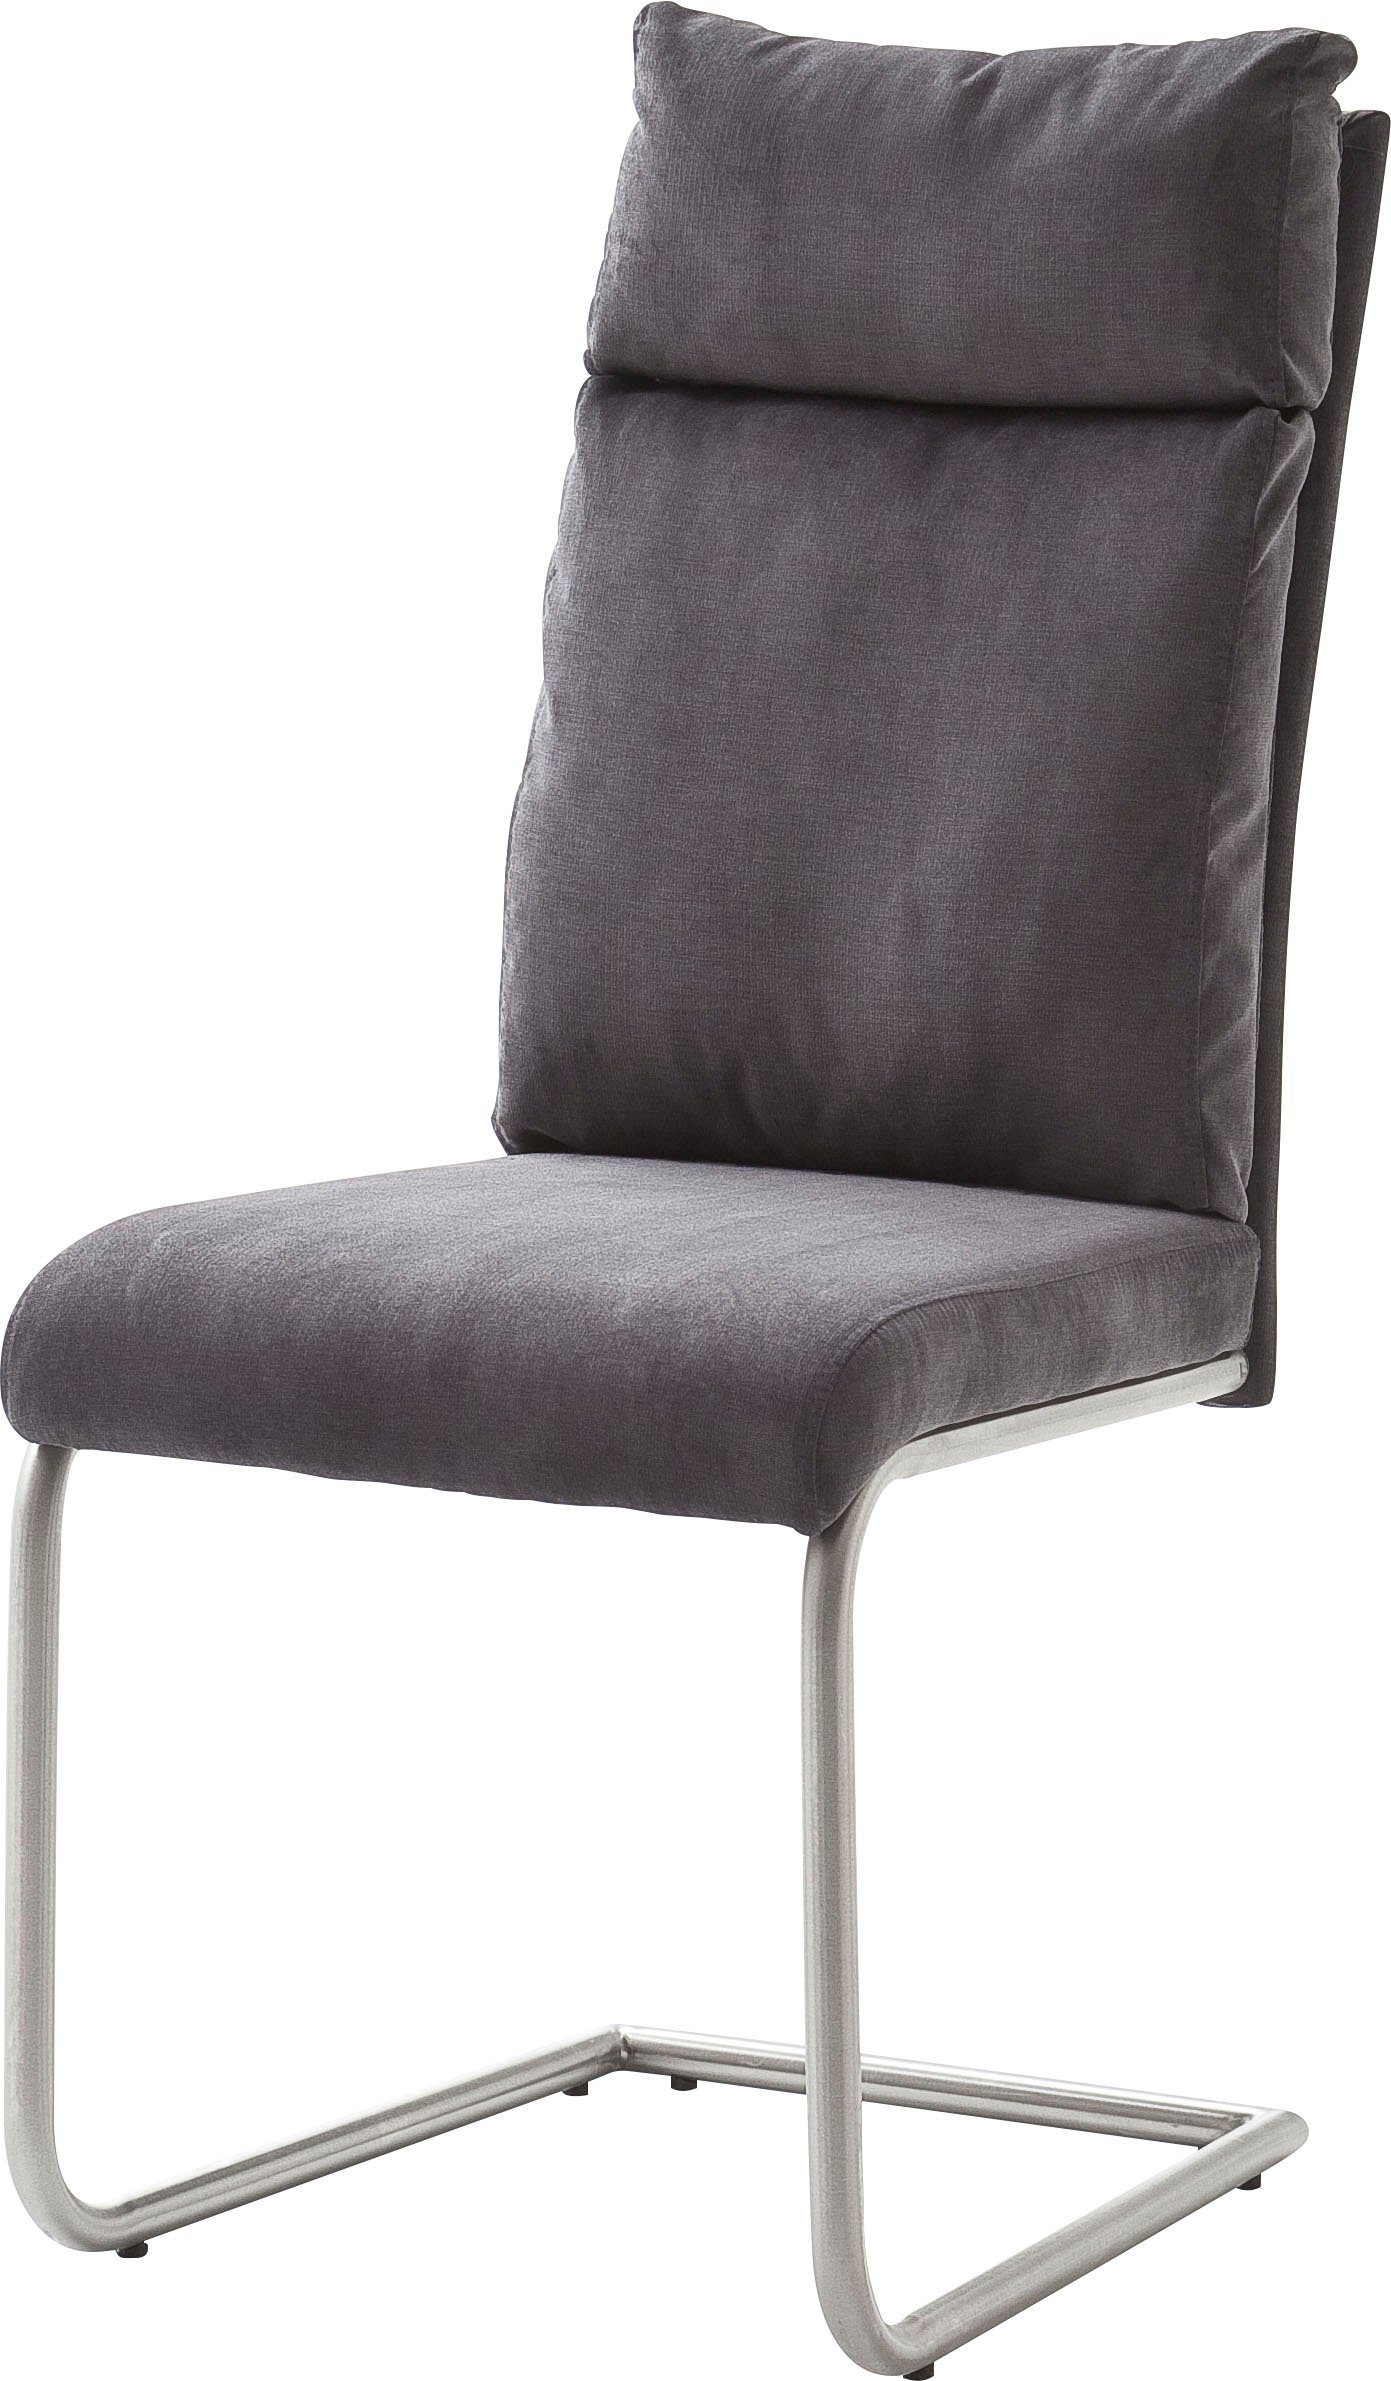 bis (Set, 2 kg, MCA PIA St), Freischwinger Kissenoptik Stuhl belastbar 120 furniture